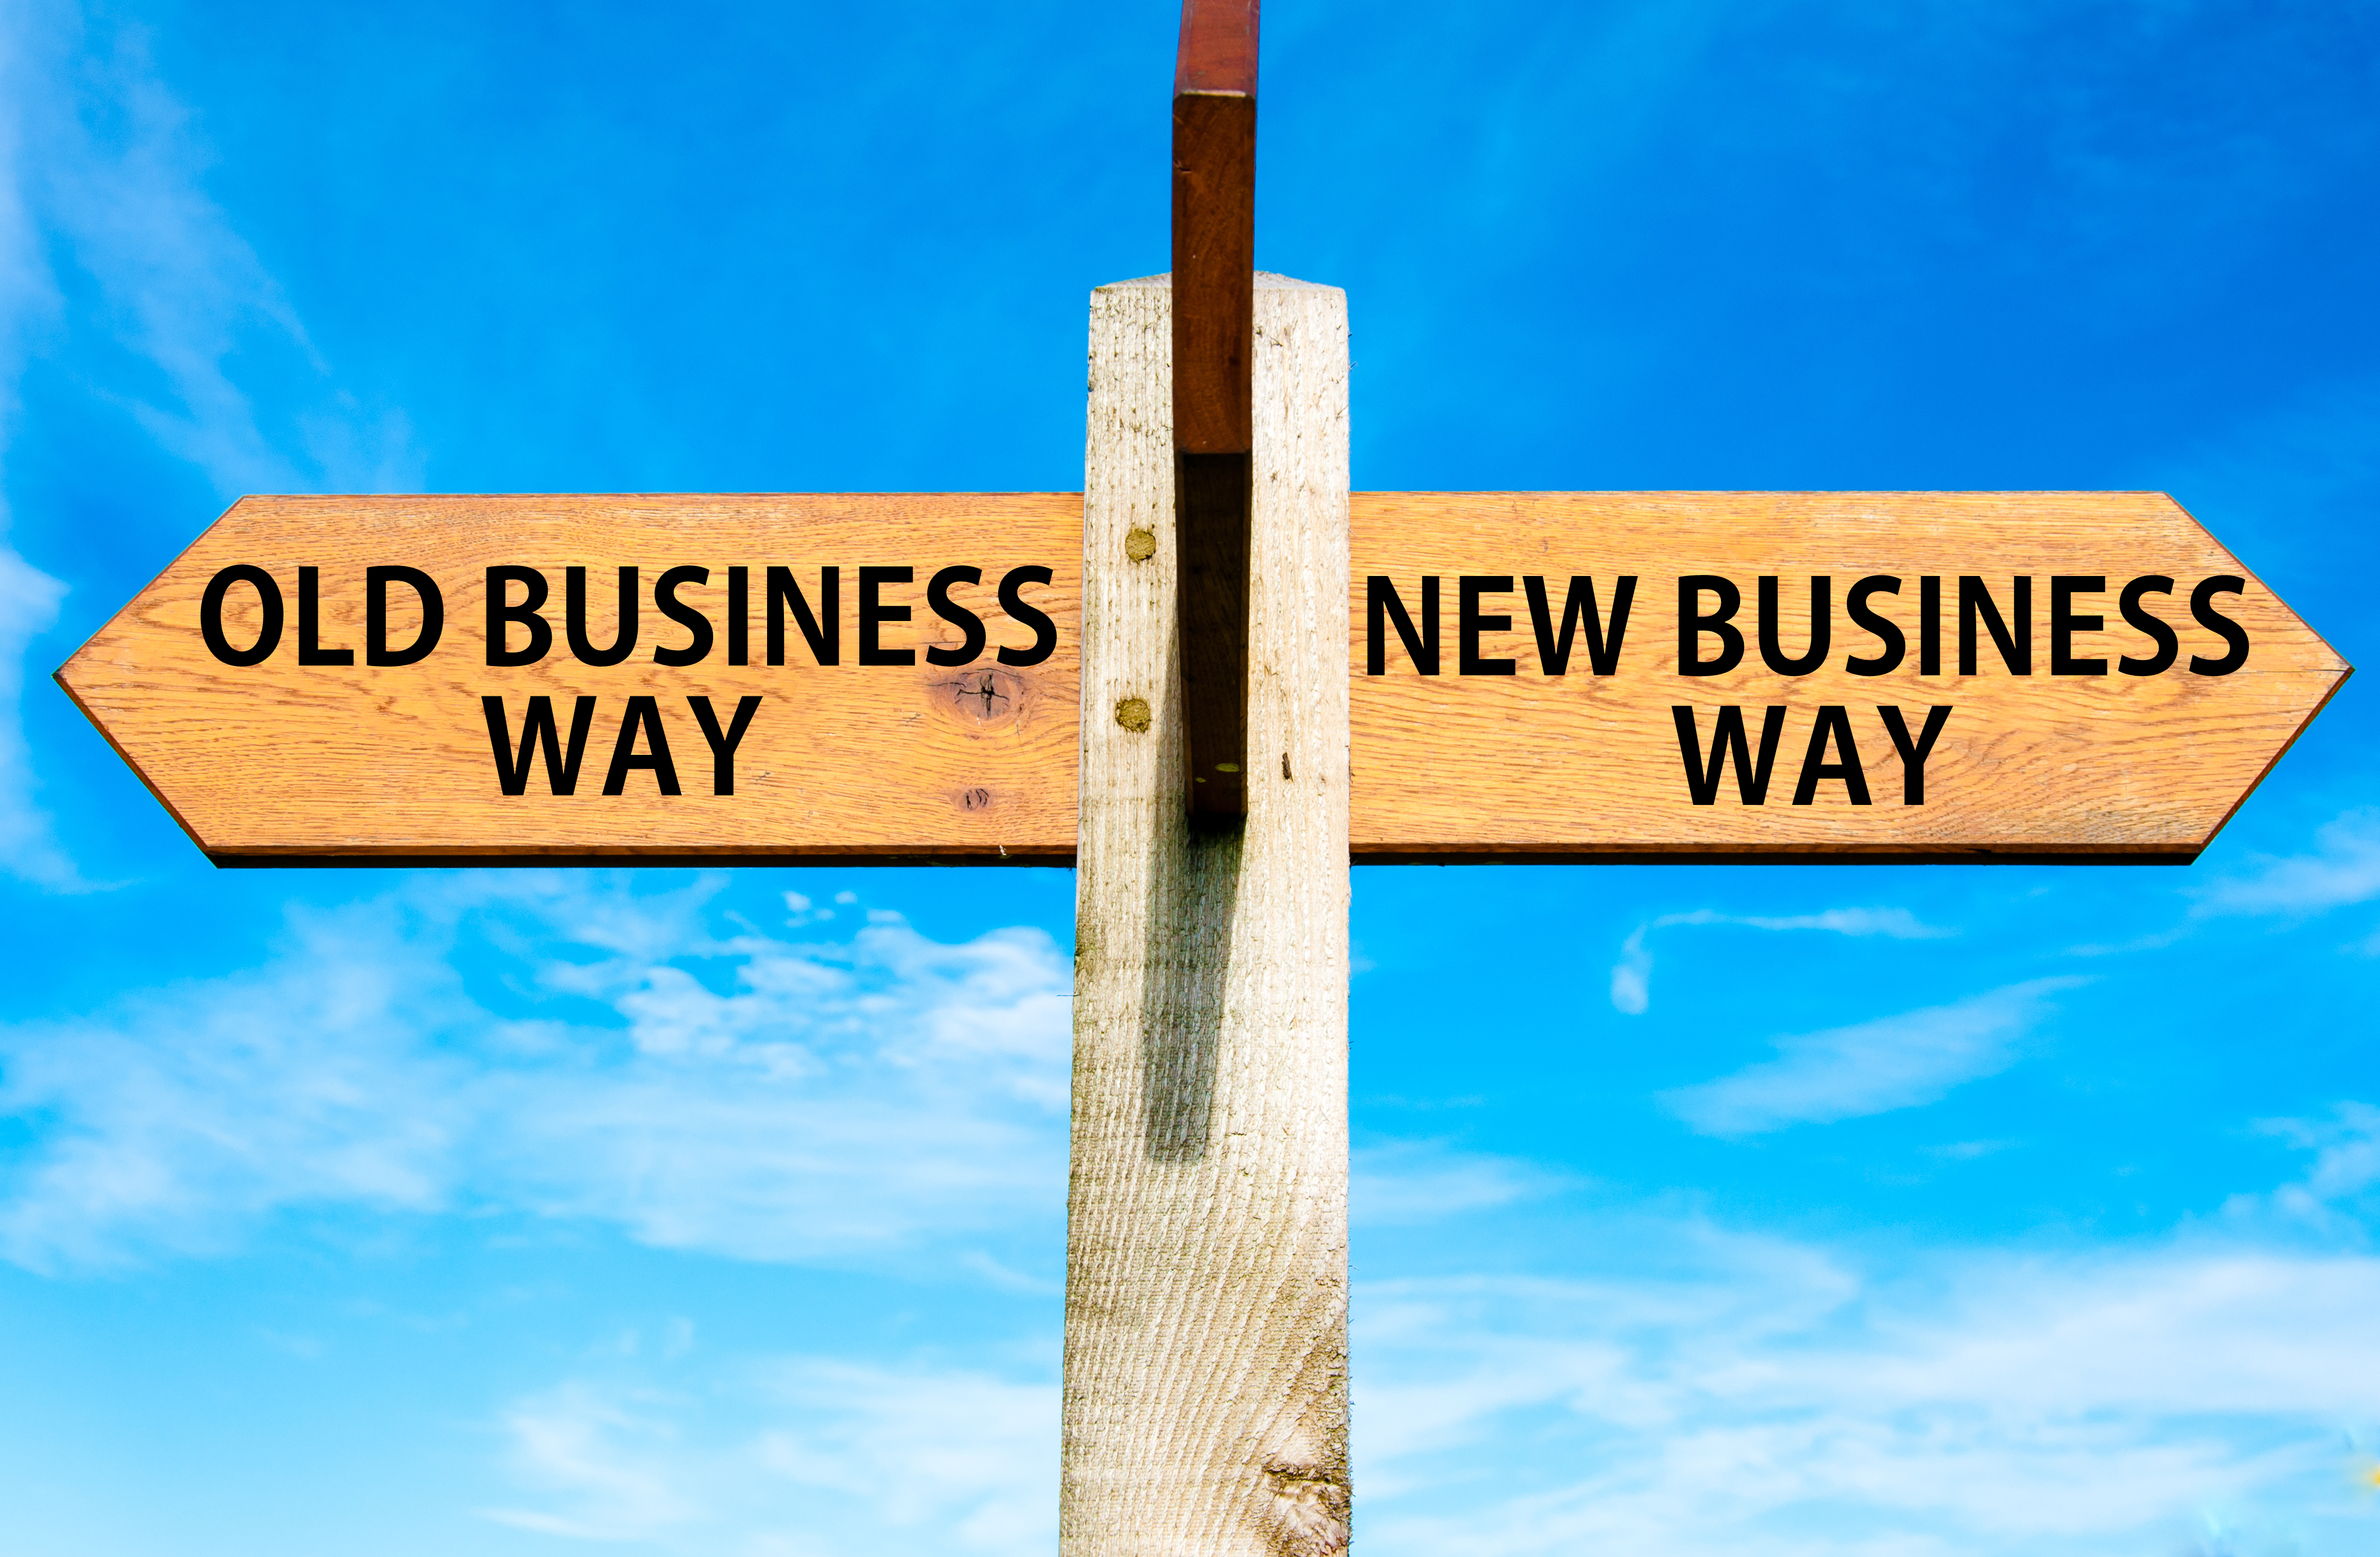 Old Business Way versus New Business Way